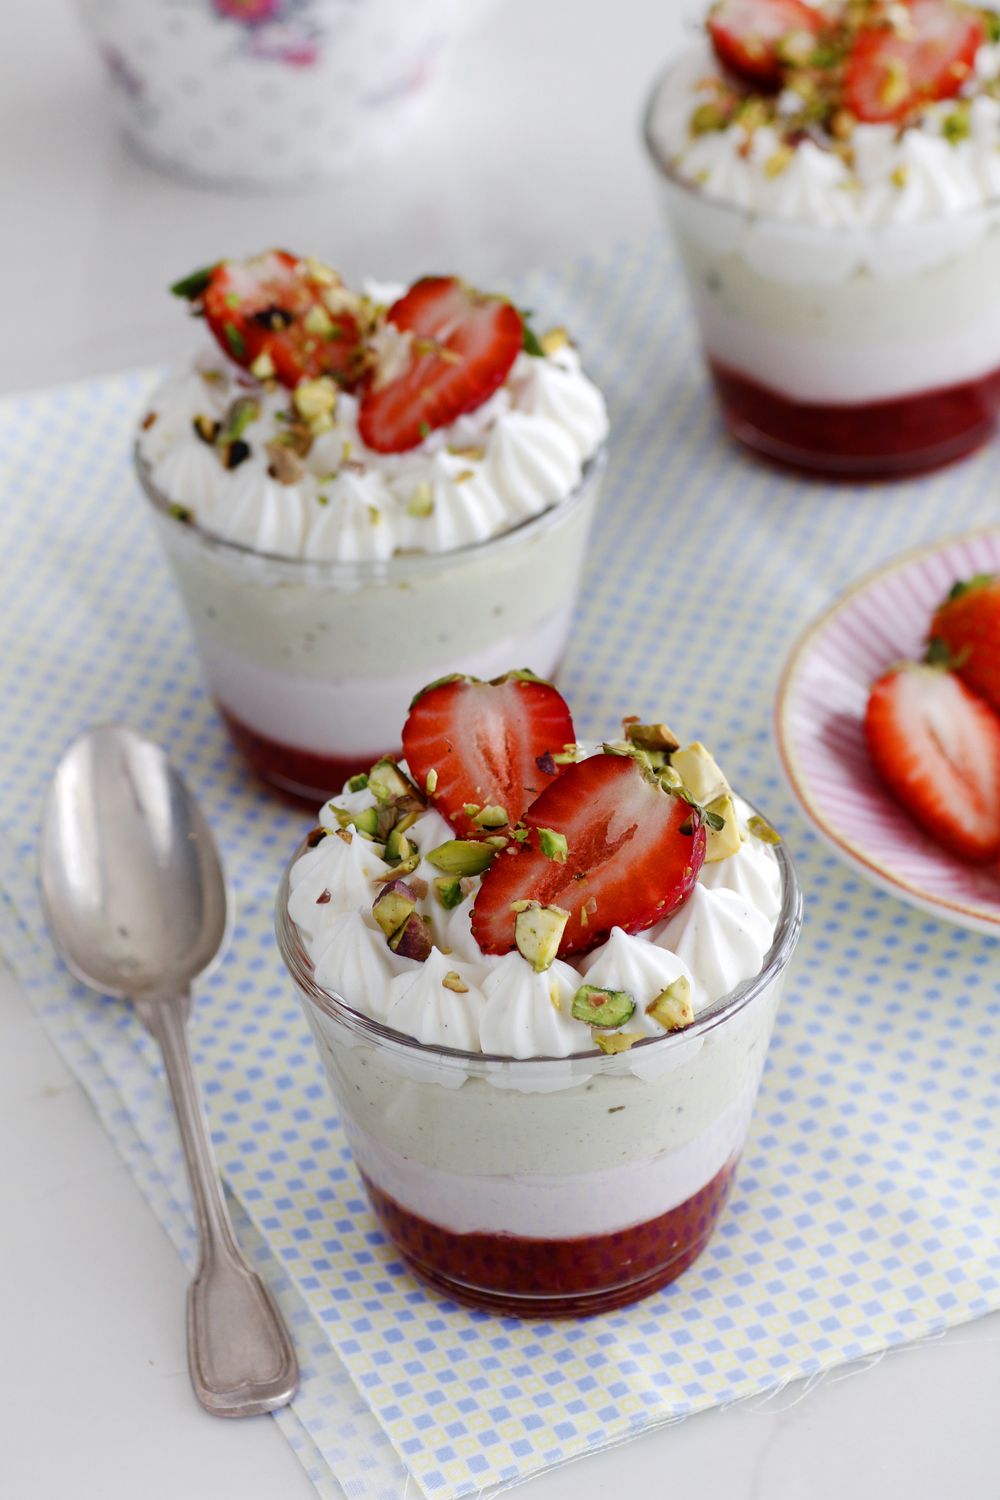 Pistachio and Strawberry Parfaits #strawberry #recipe #parfait #baking #dessert #glutenfree #pistachio